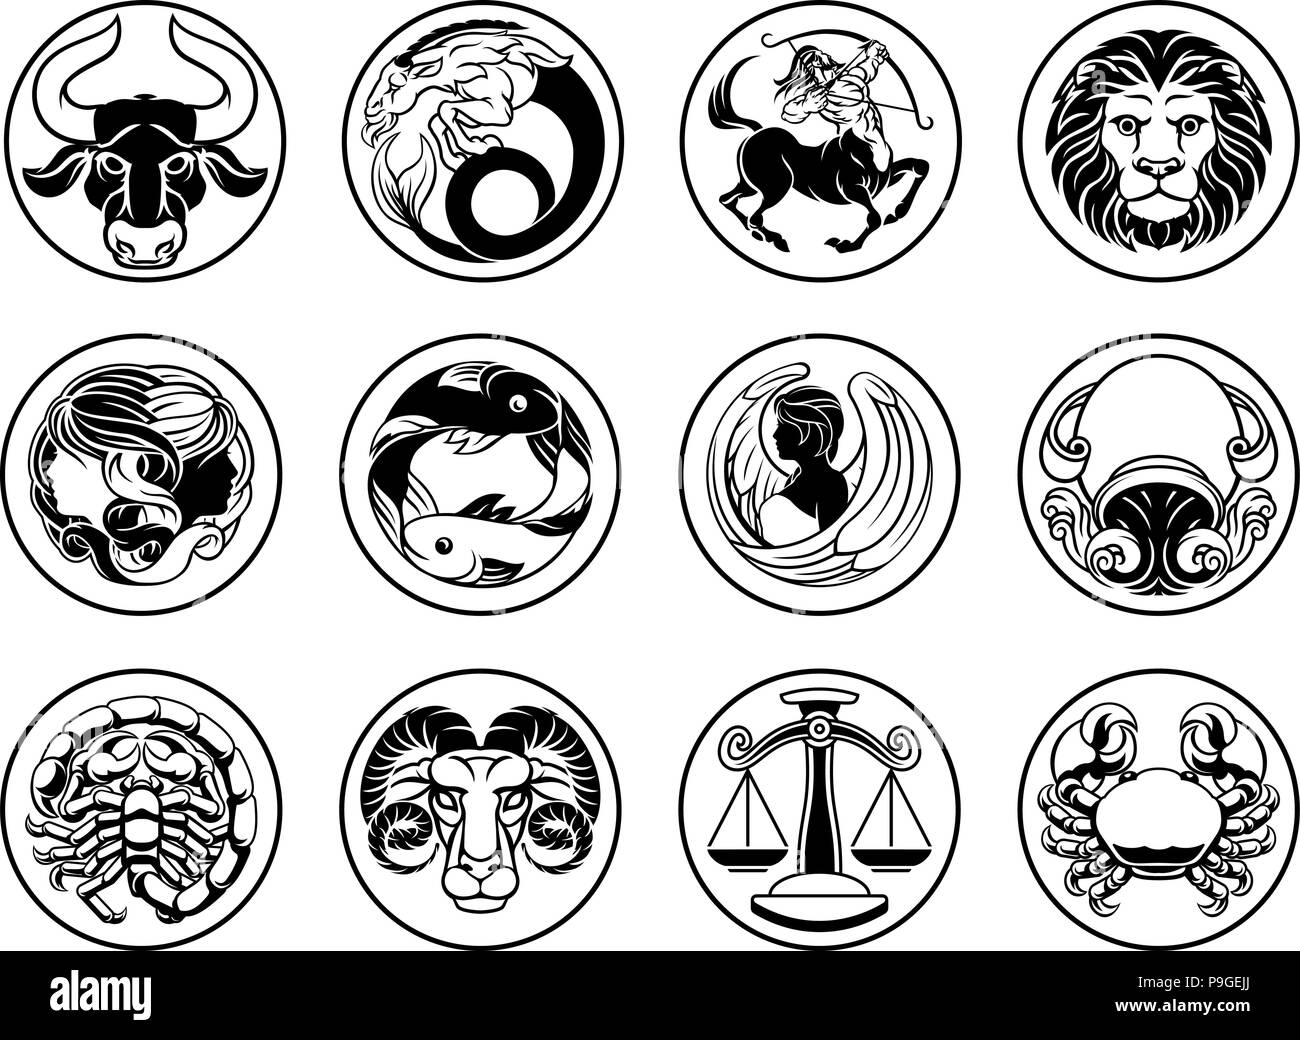 Zodiac astrology horoscope star signs symbols set Stock Vector